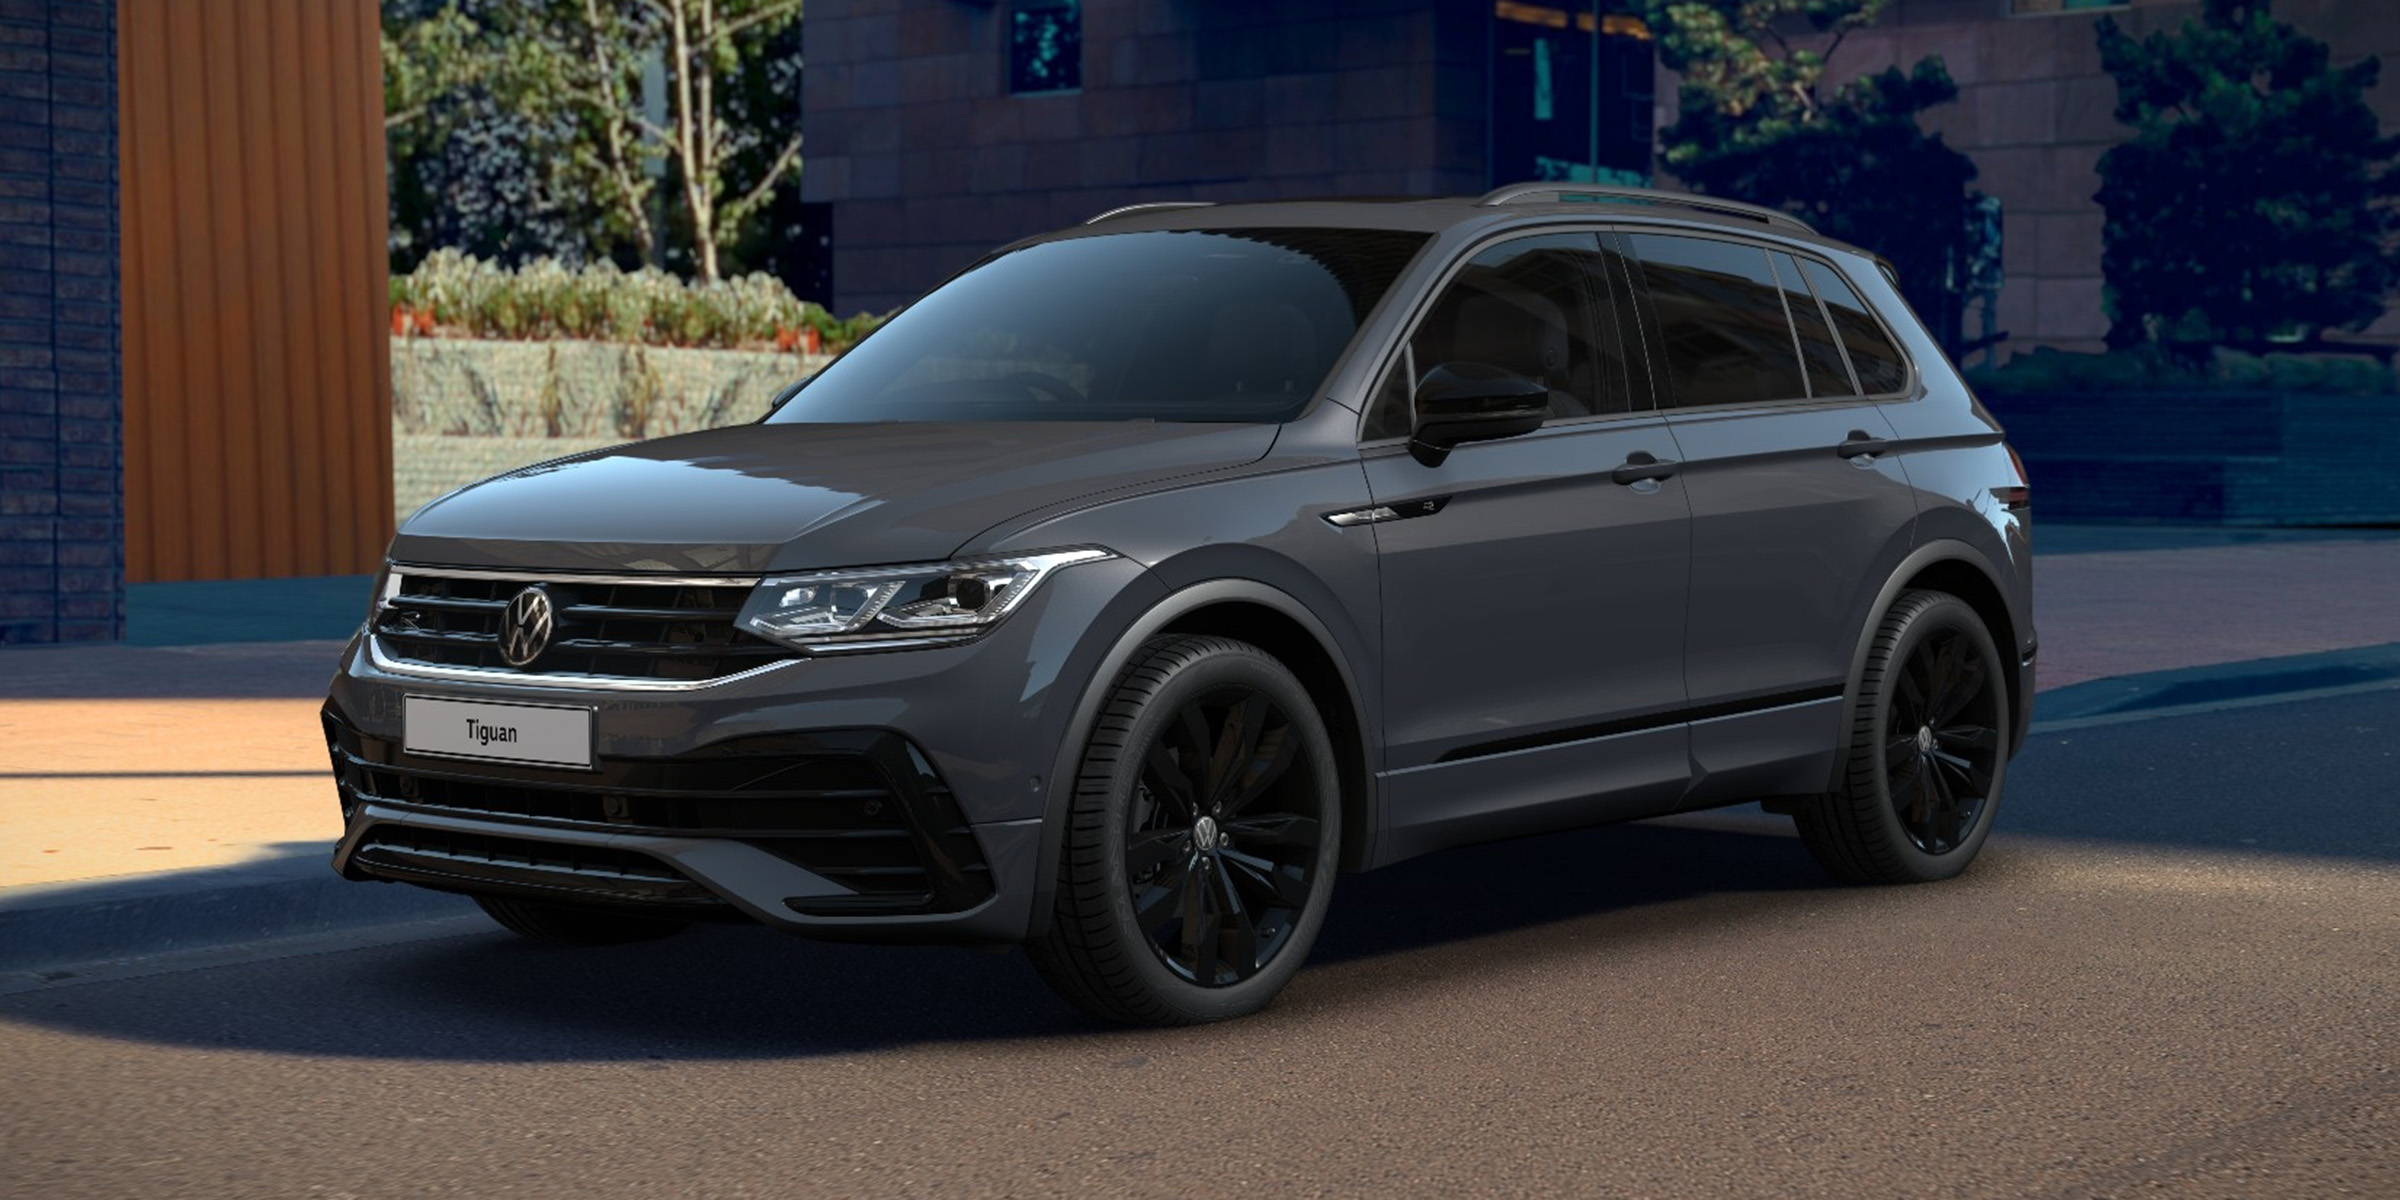 Volkswagen Tiguan Black Edition gains all-wheel drive options